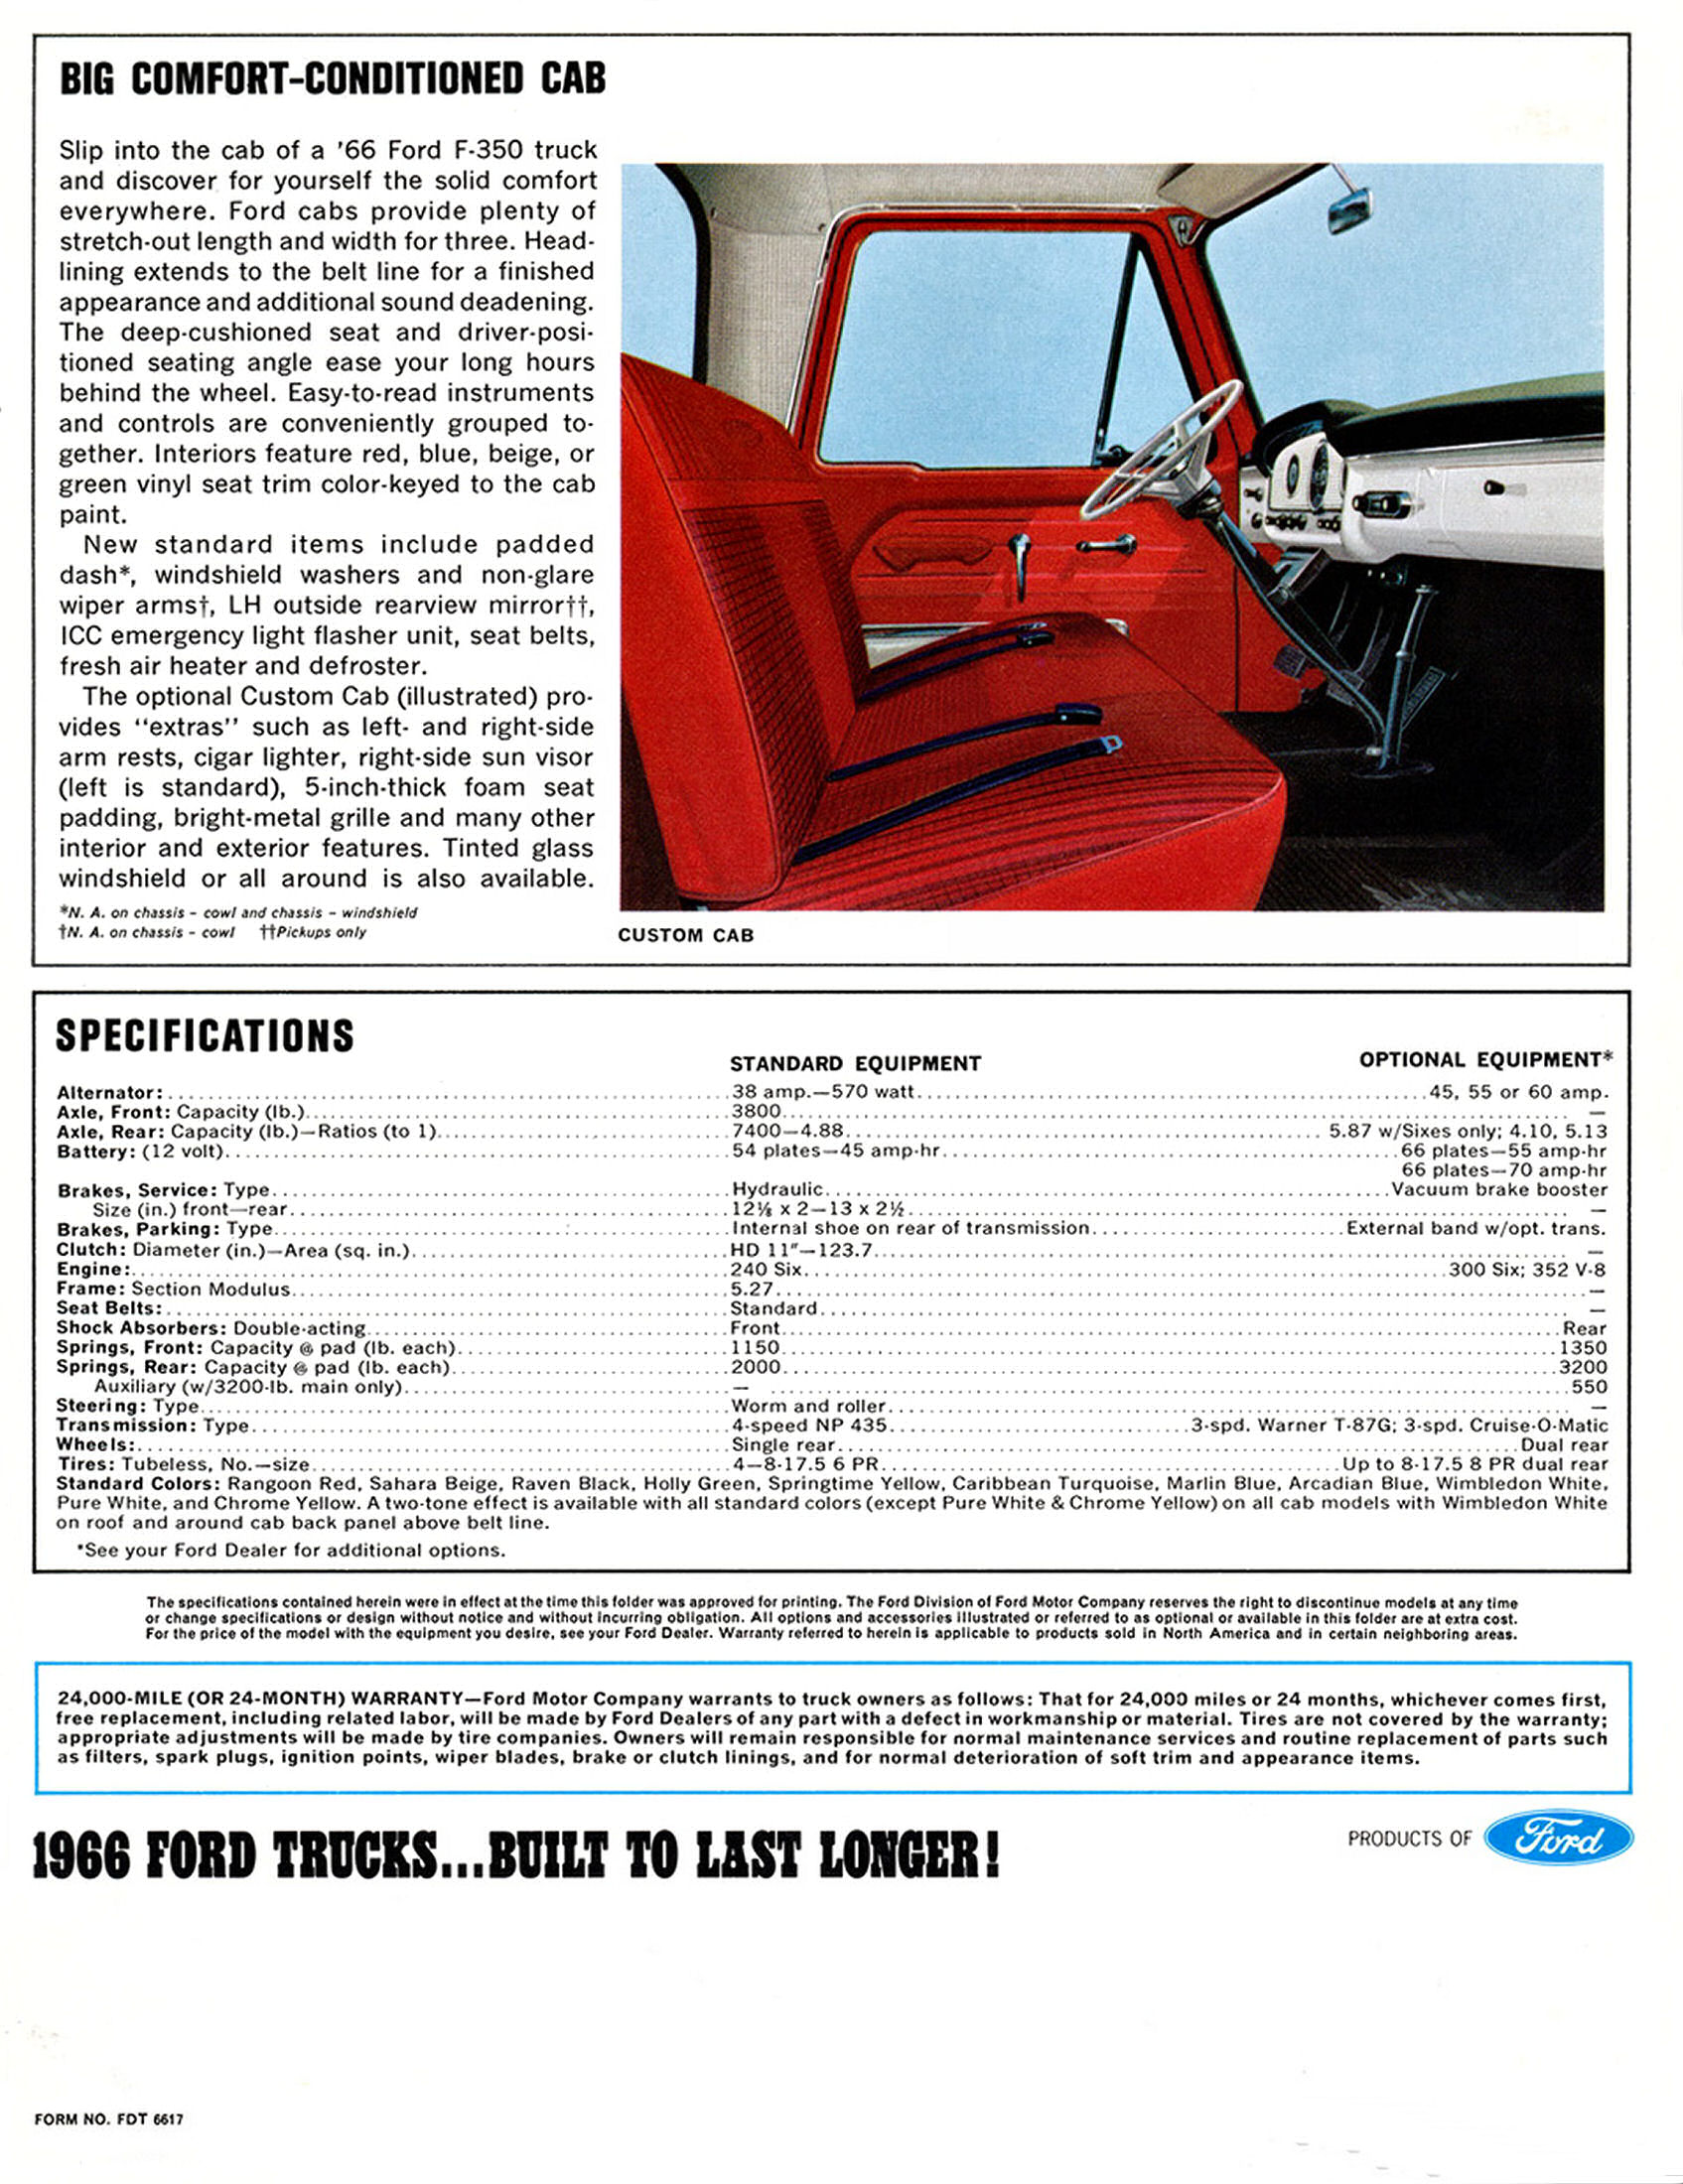 1966 Ford F-350 Truck-04